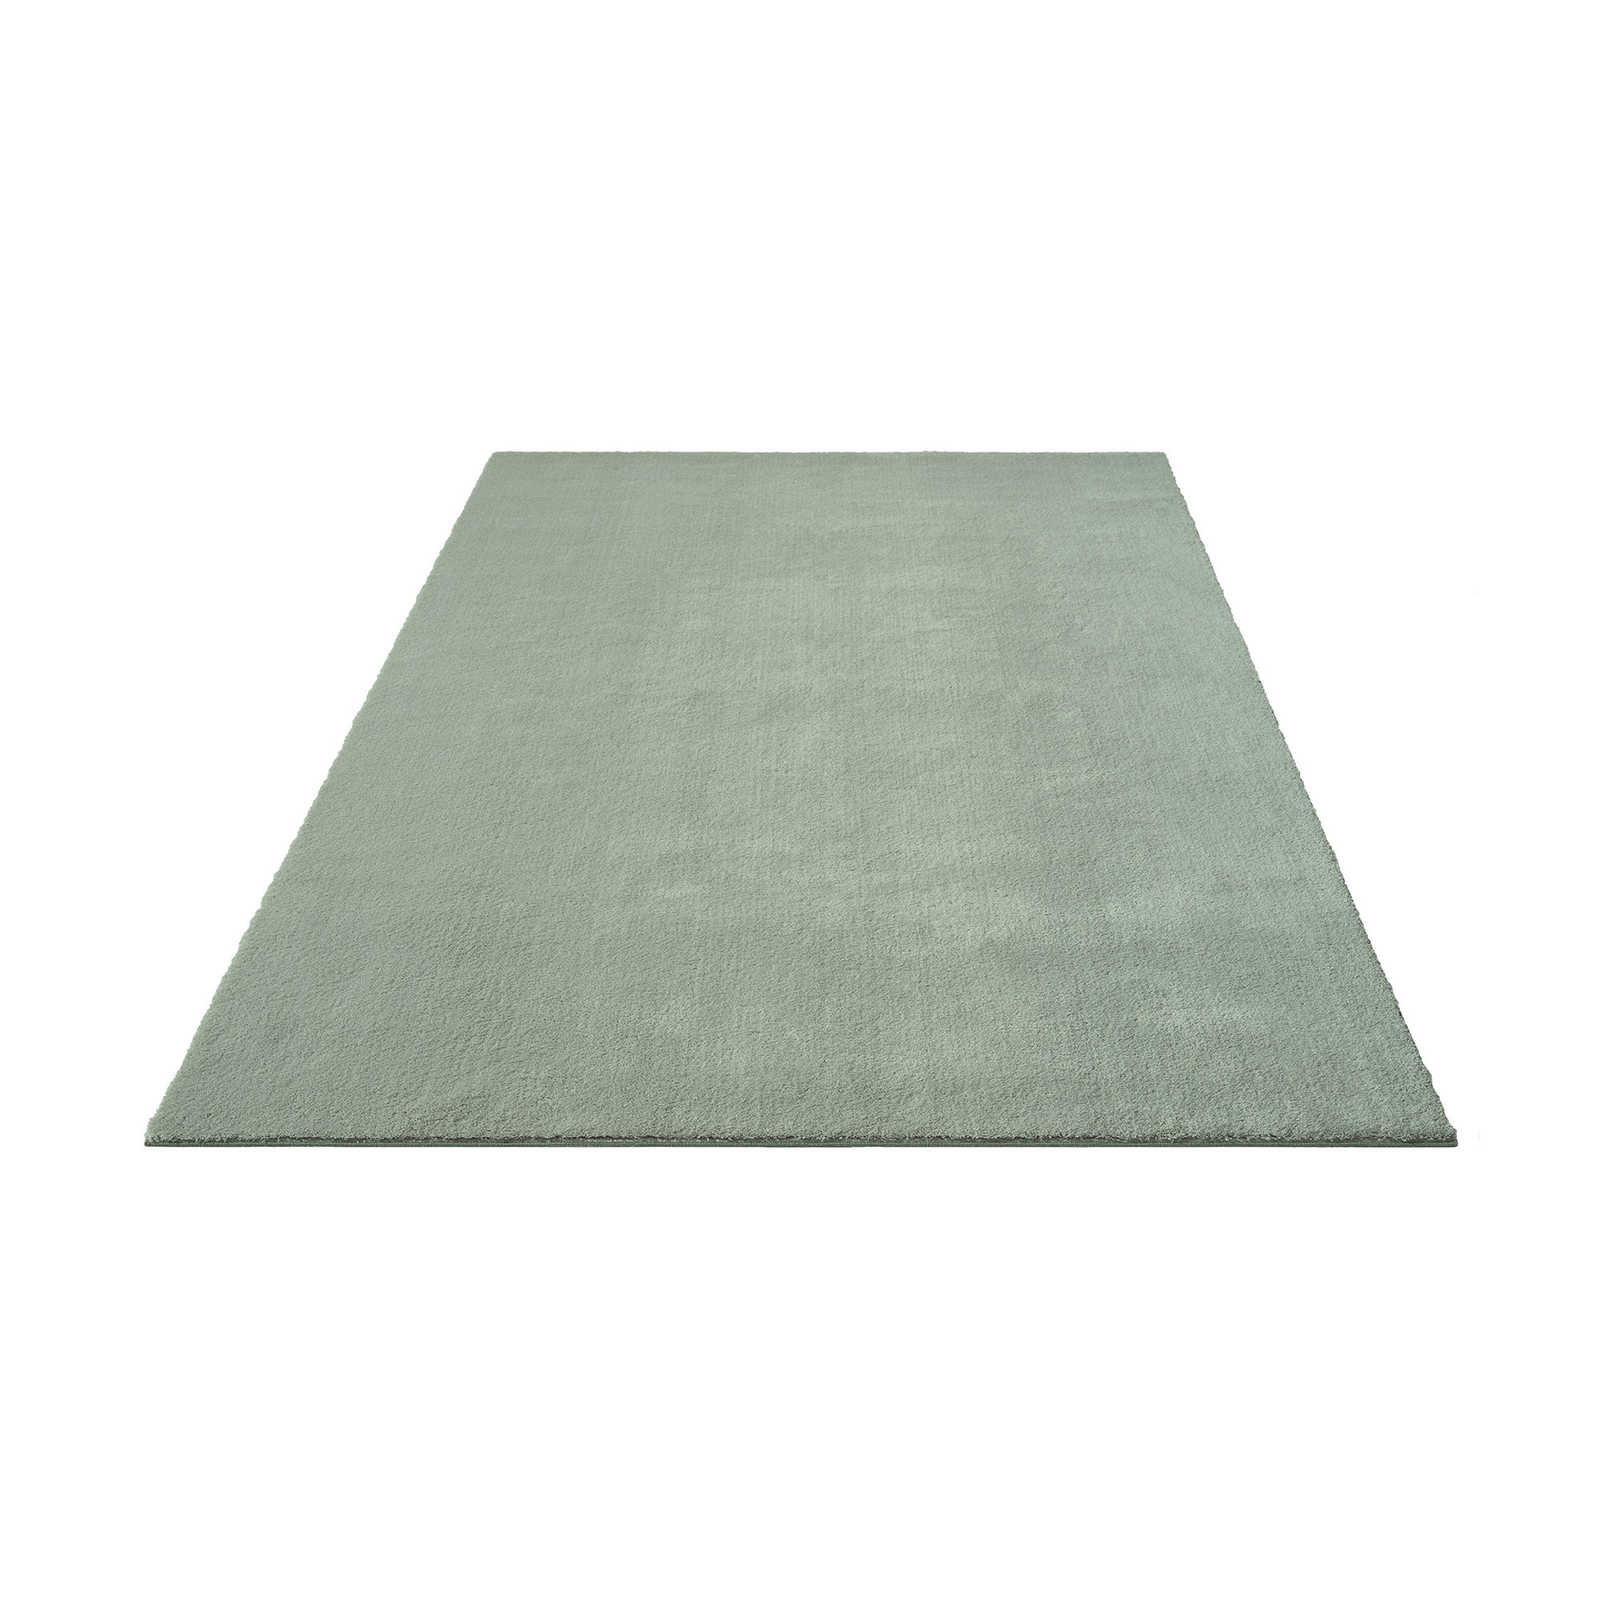 Soft high pile carpet in green - 290 x 200 cm
